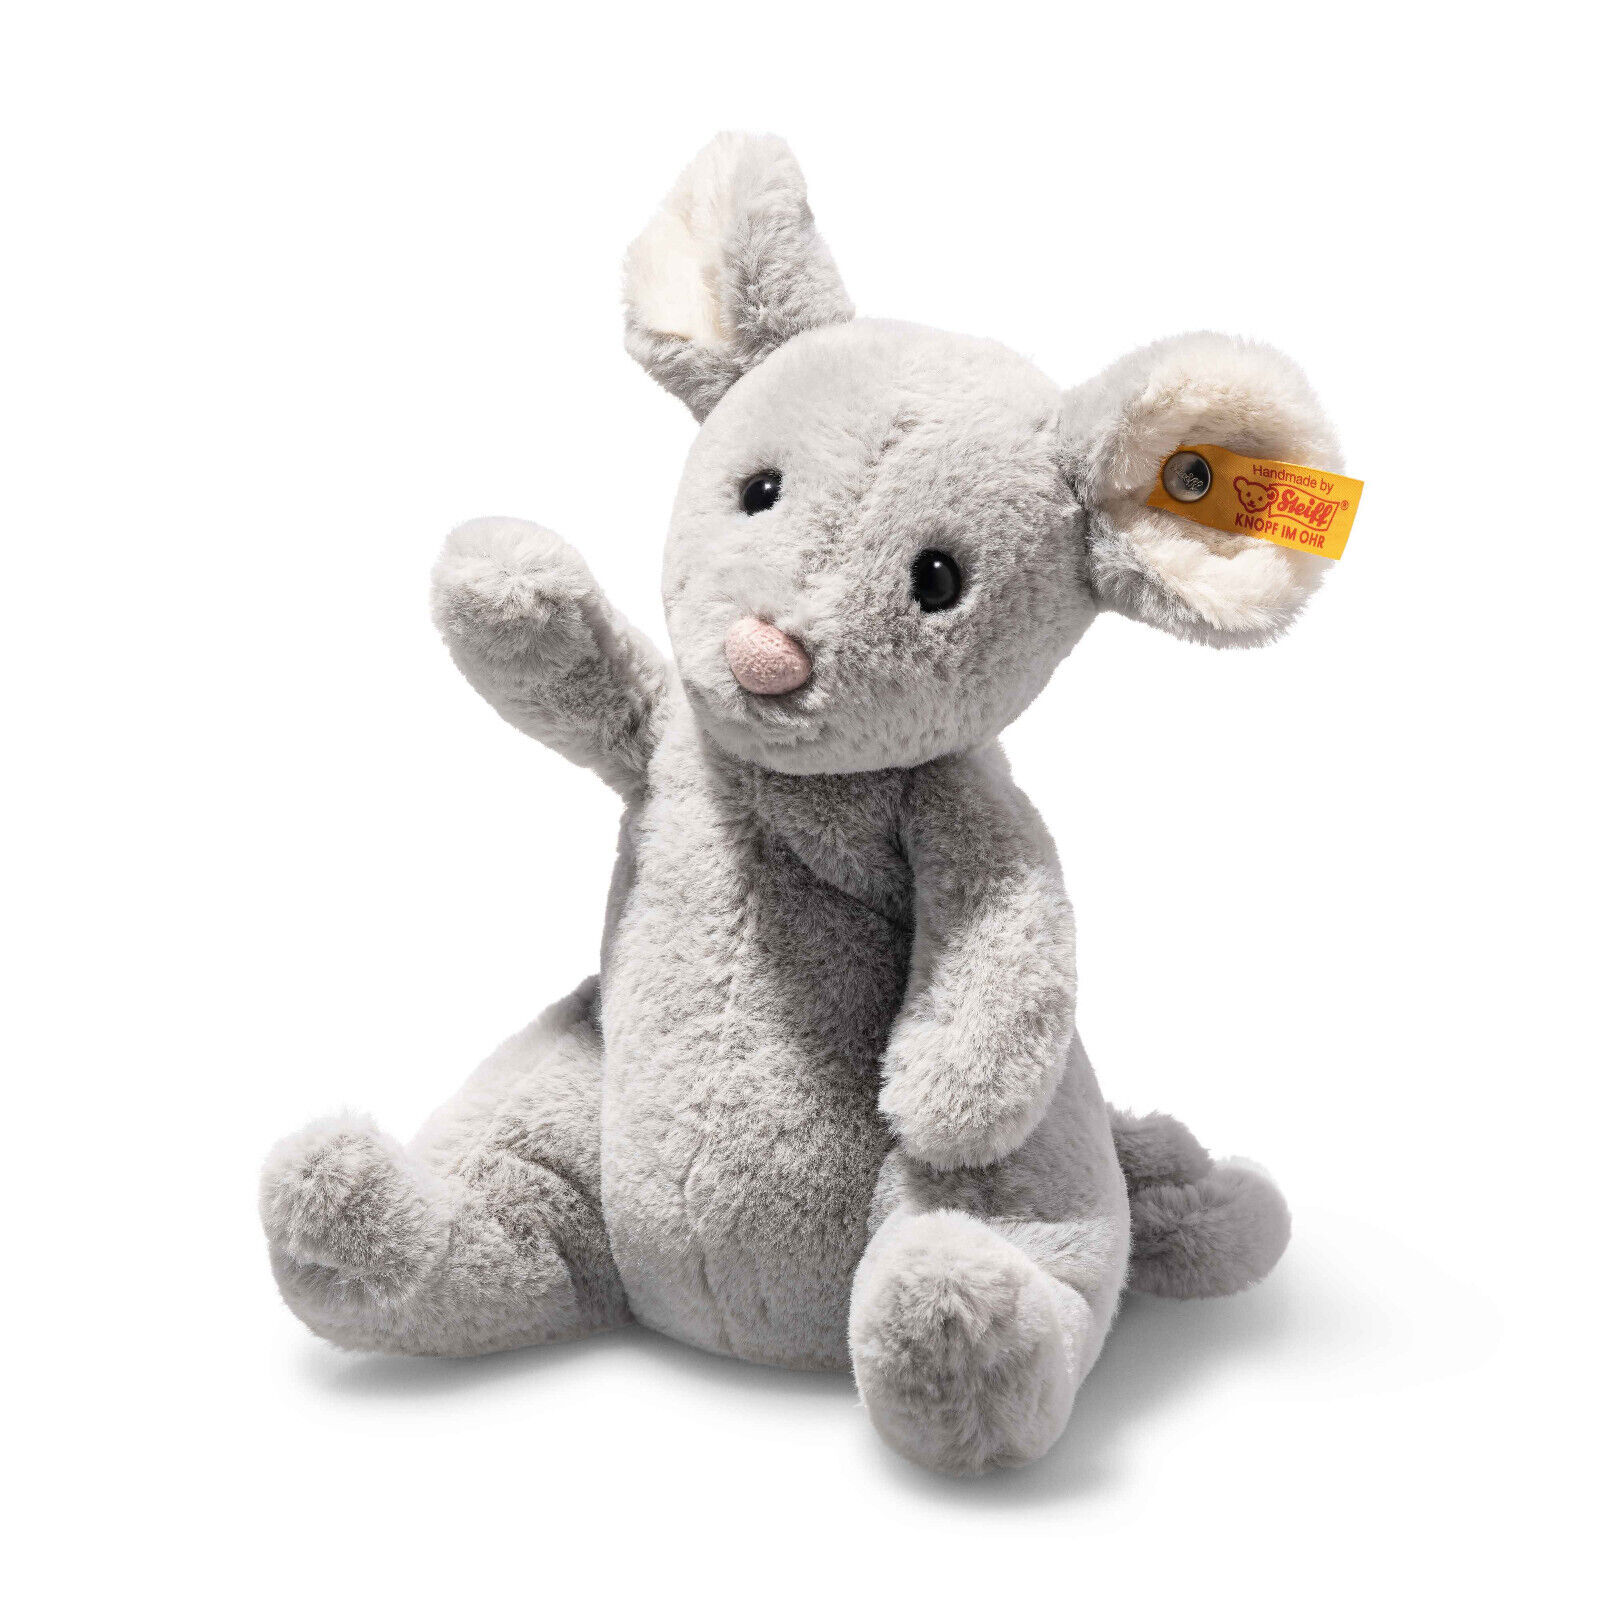 STEIFF Cheesy Maus 19 cm blaugrau 056246  'Soft Cuddly Friends' - für Kinder  - NEU!